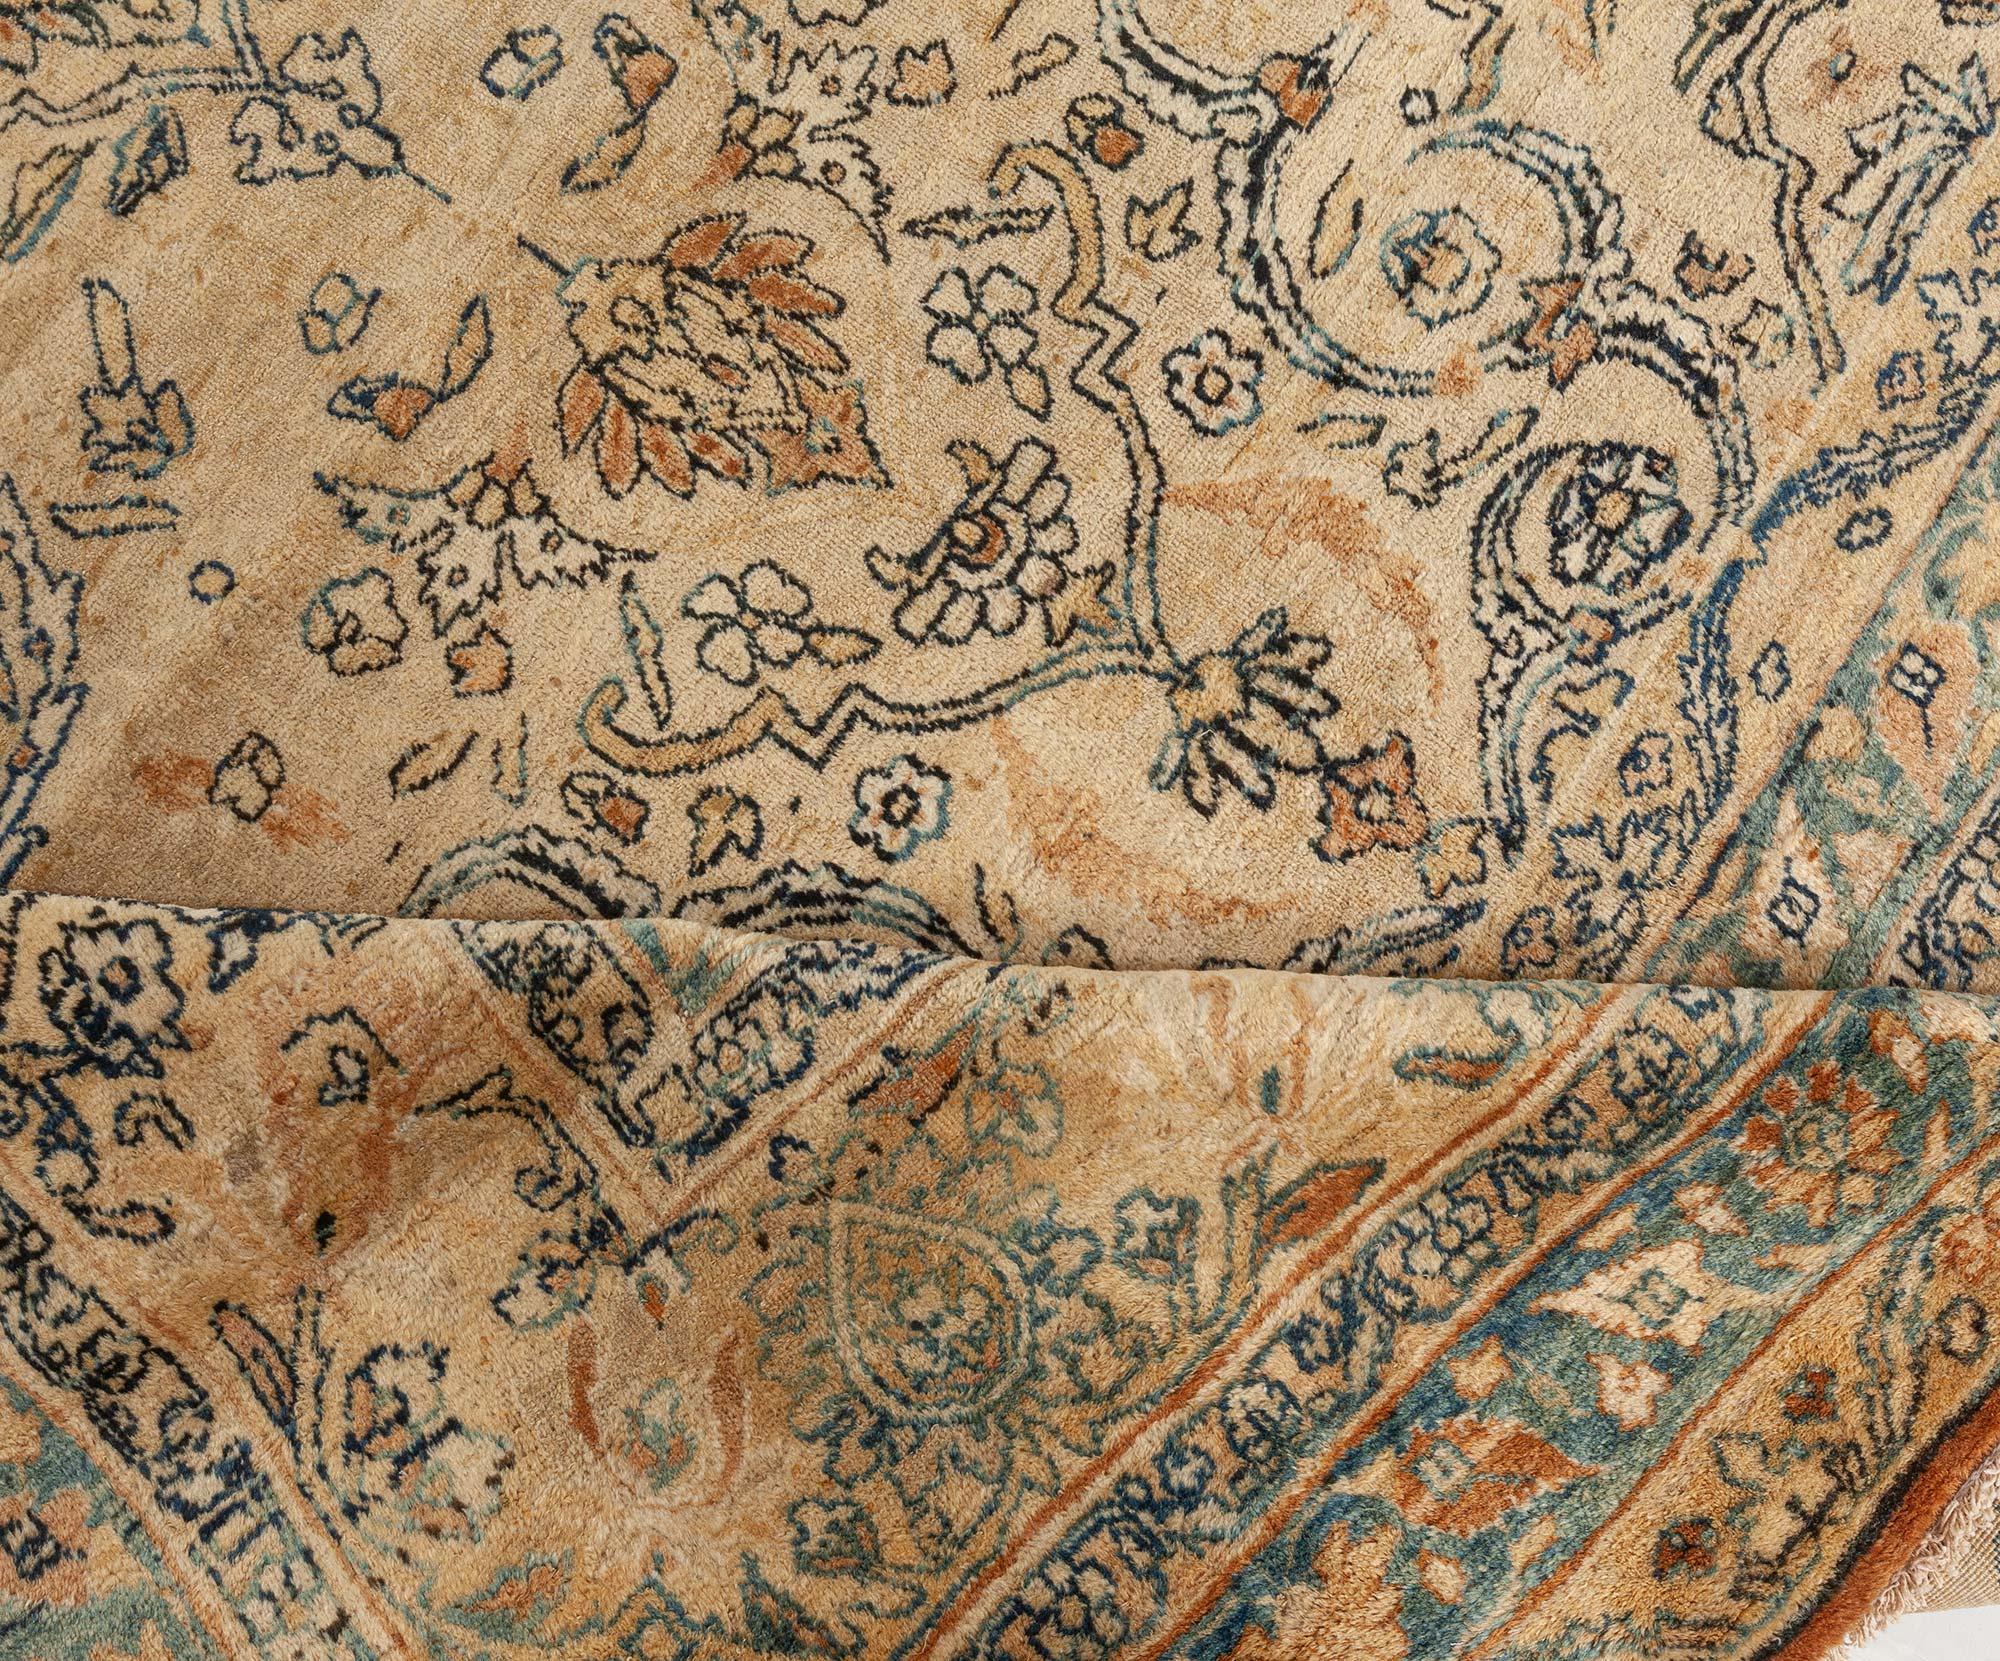 Authentic Persian Kirman handwoven wool rug
Size: 9'9